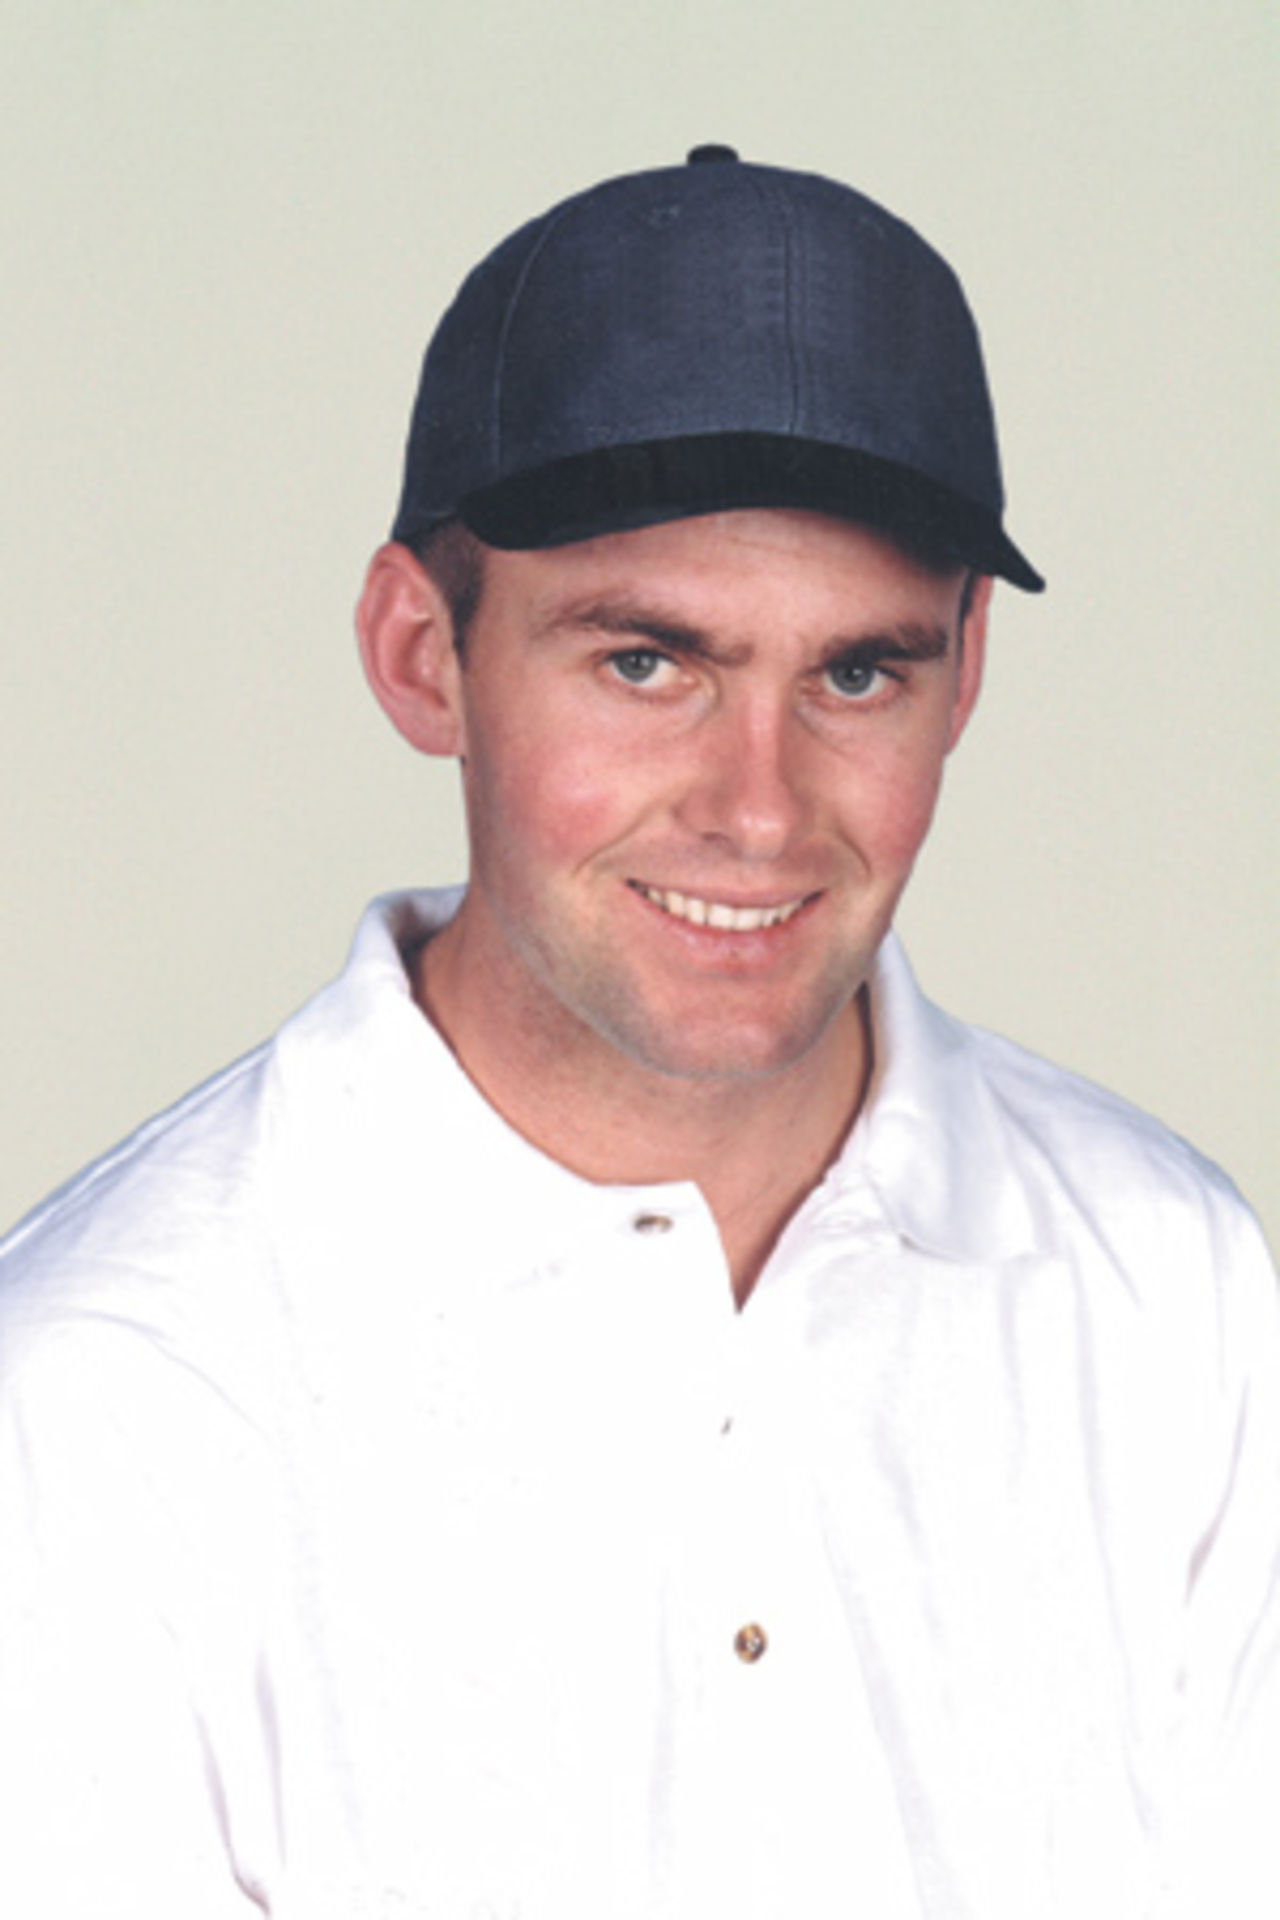 Portrait of Robbie Hart - New Zealand player in the 2002/03 season.